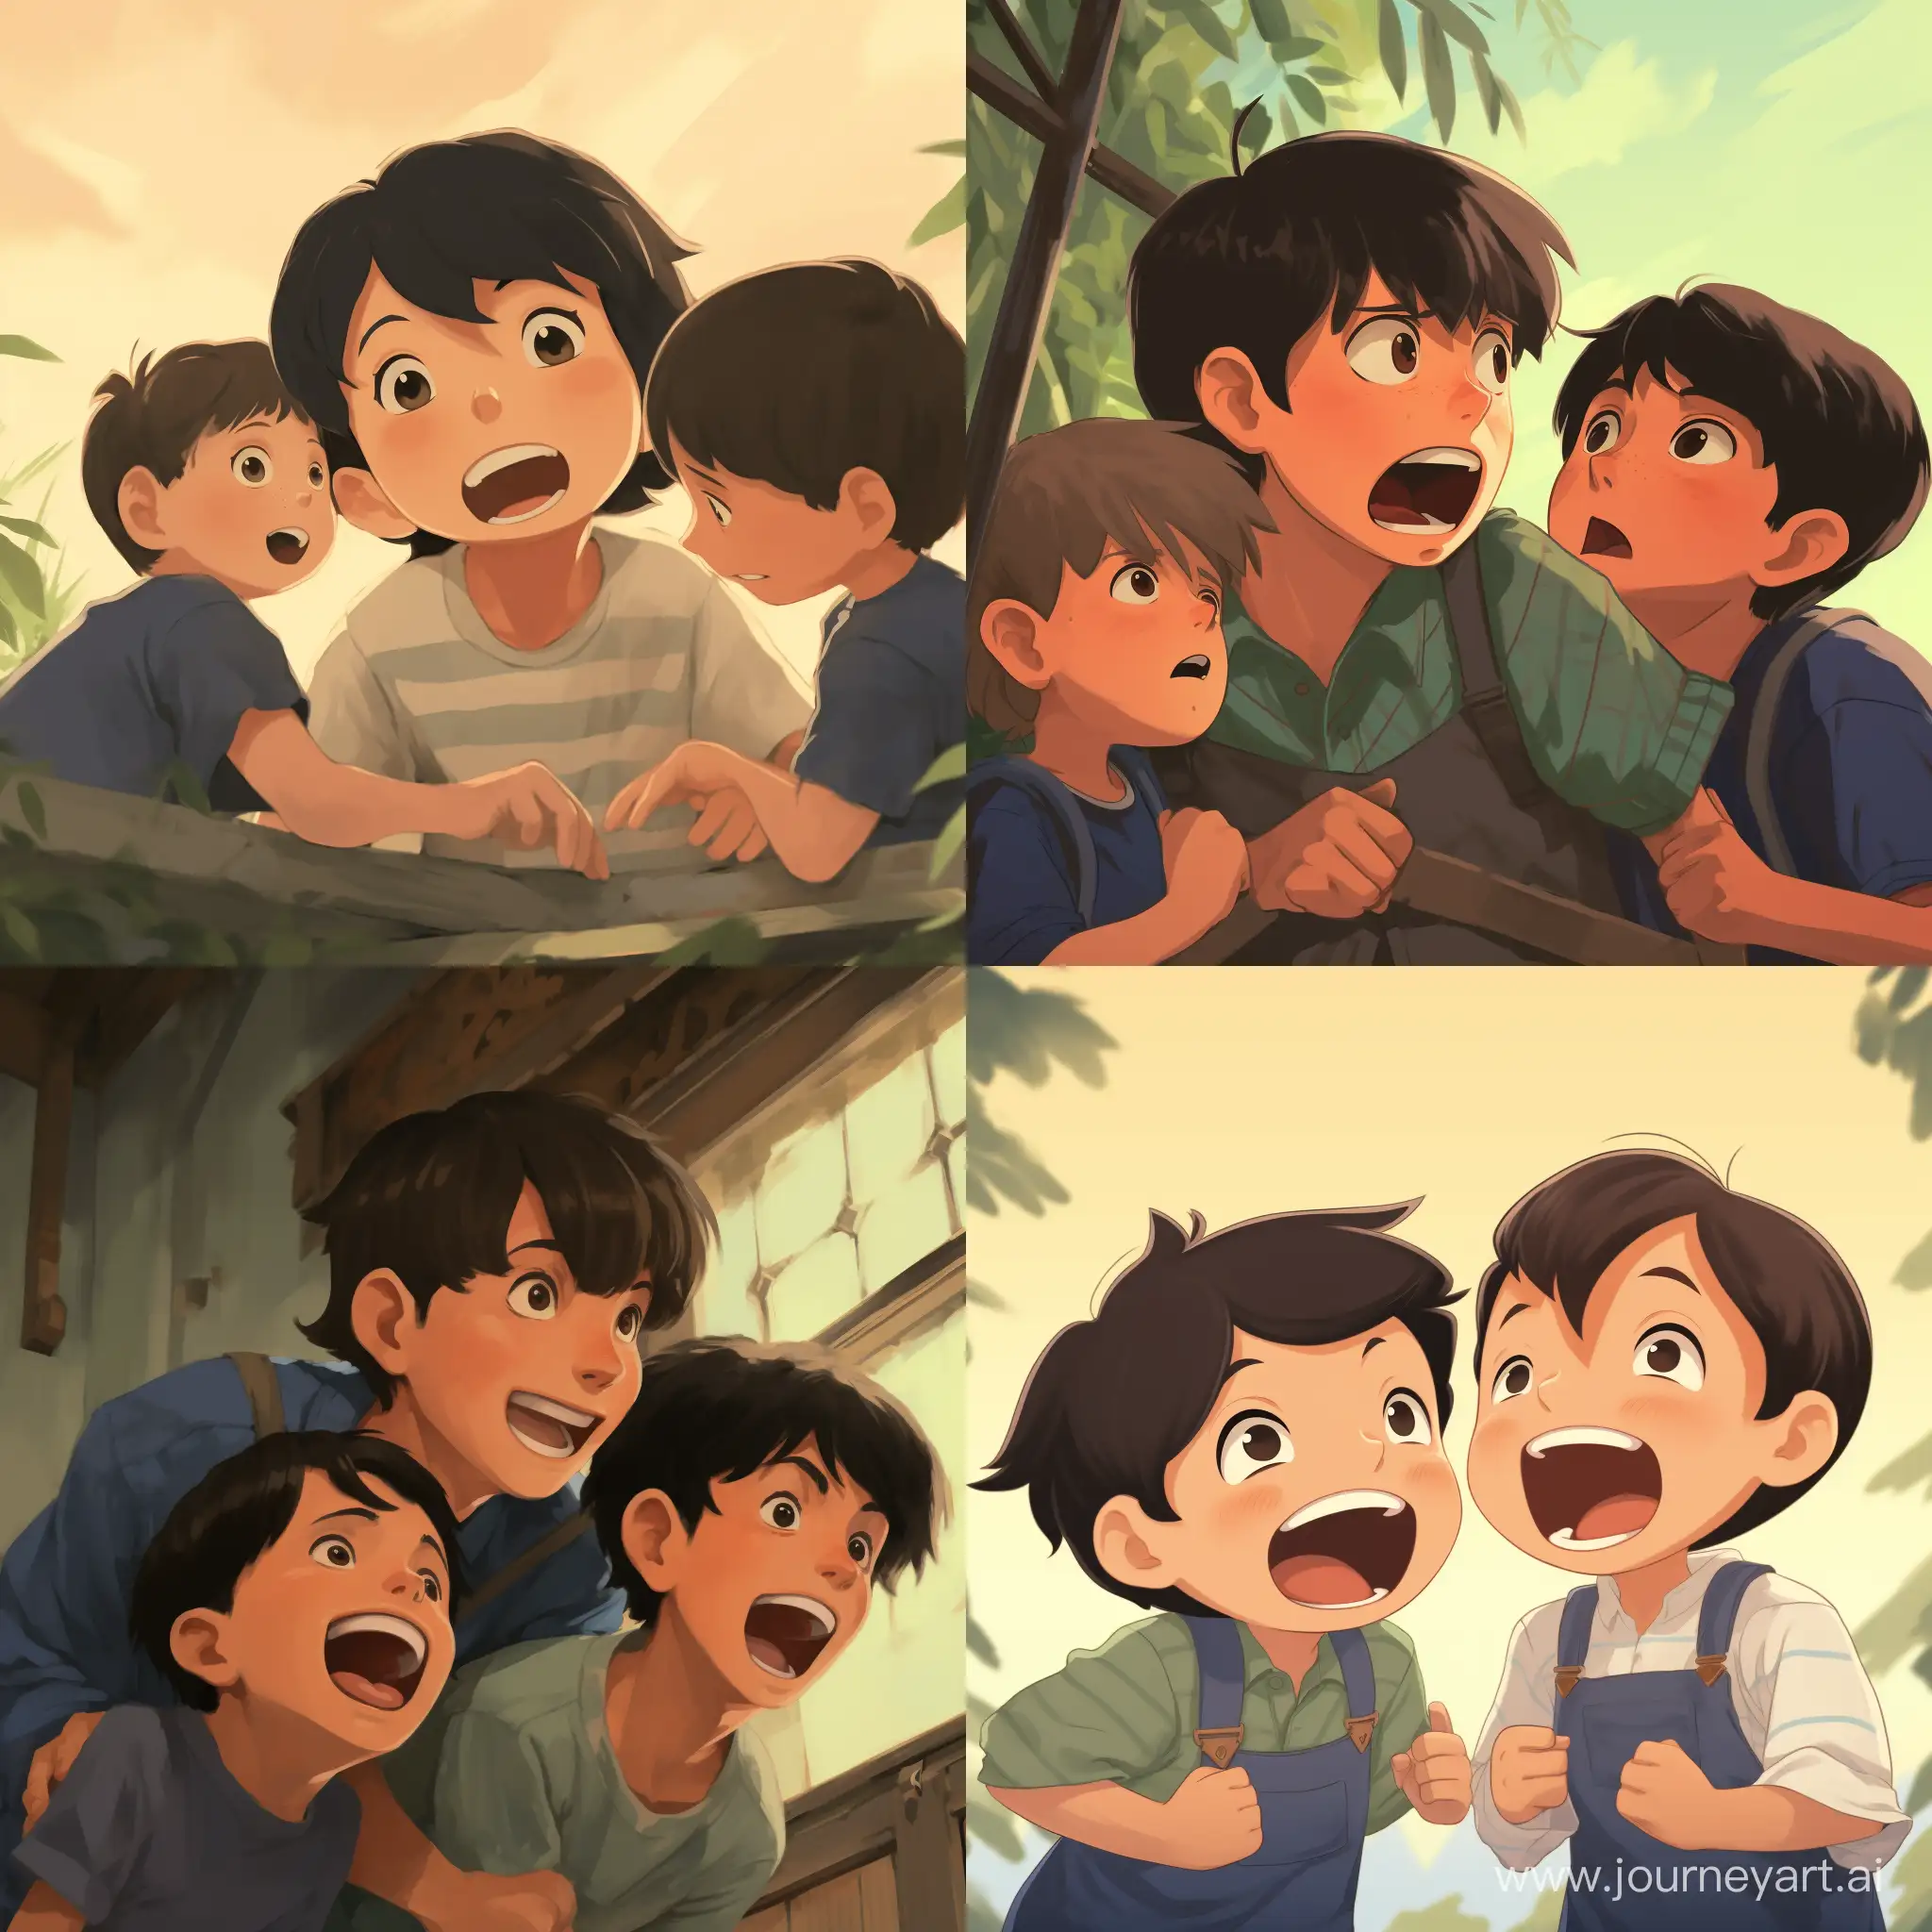 Studio-GhibliInspired-Art-Resilient-BlackHaired-Boy-Facing-Bullies